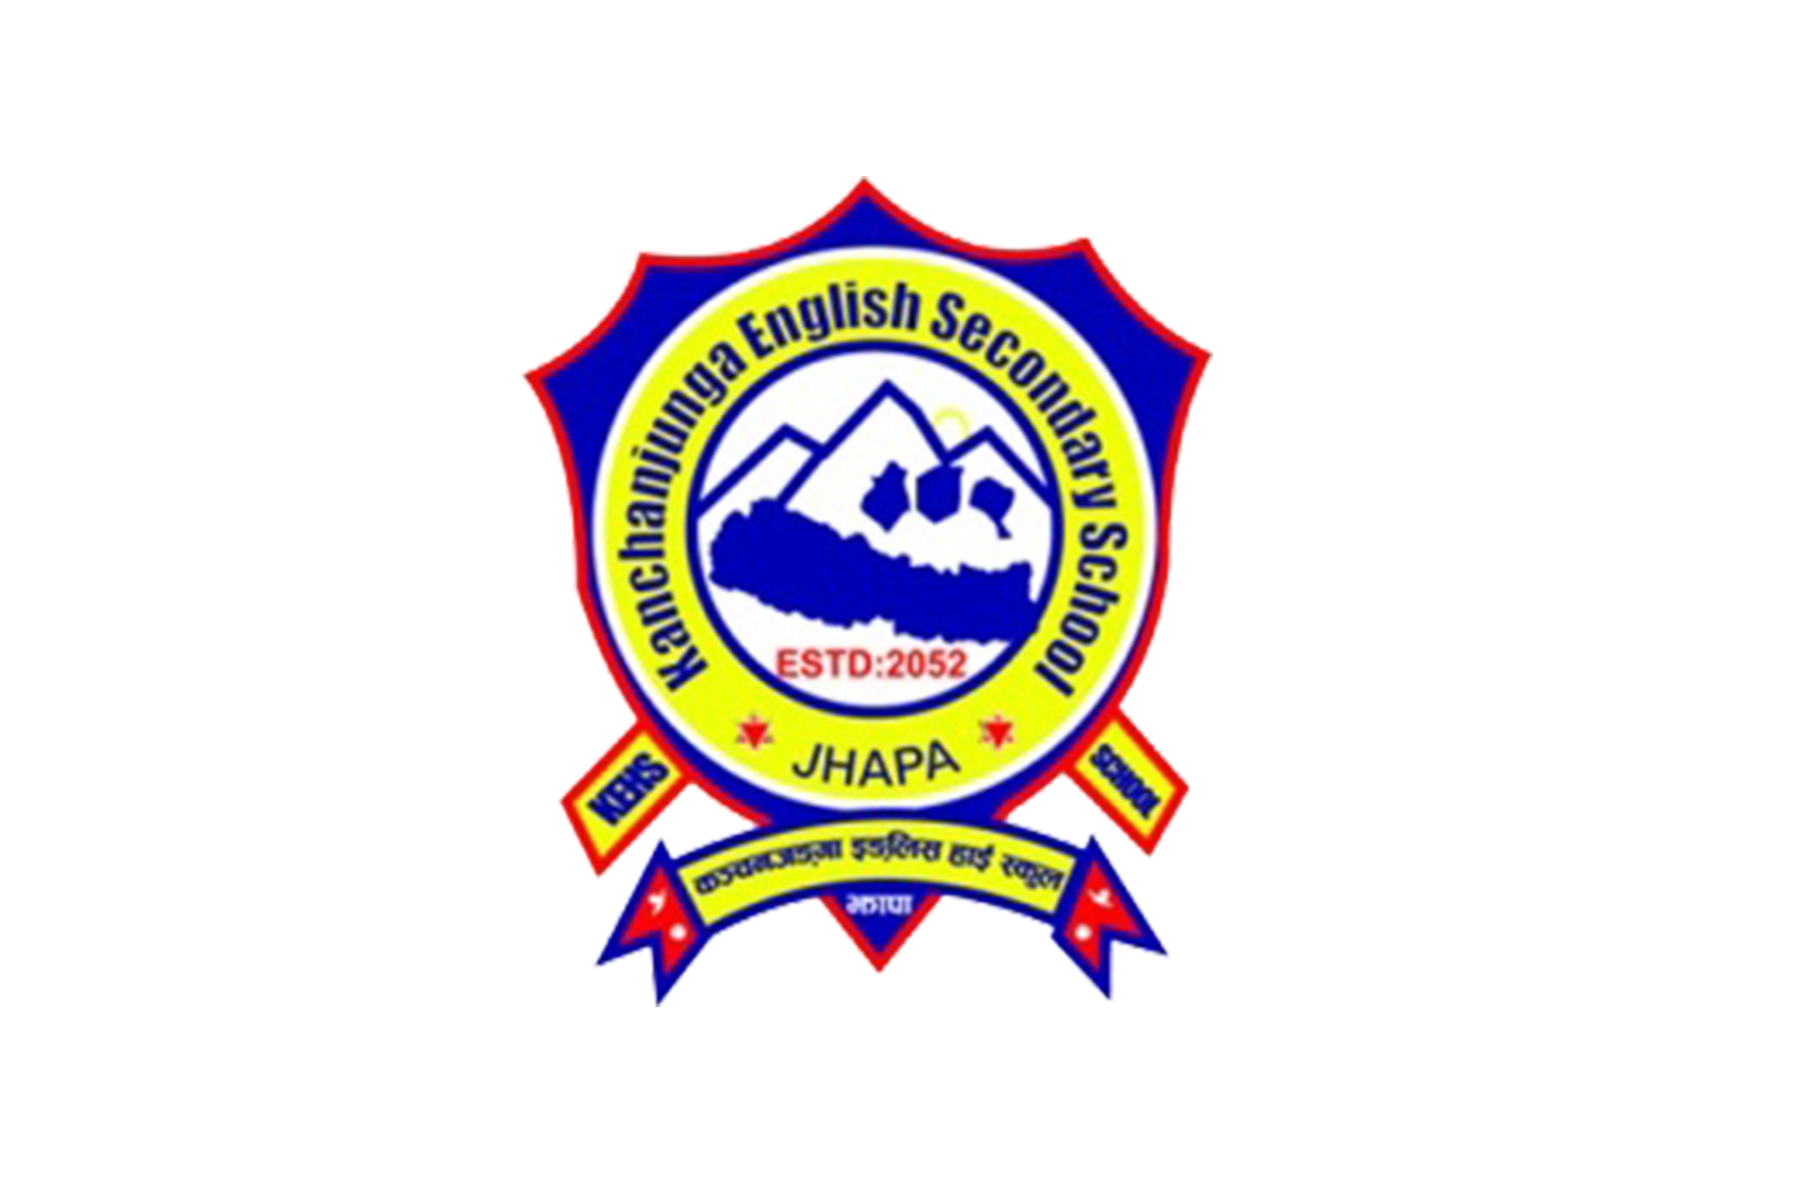 Kanchanjunga School logo